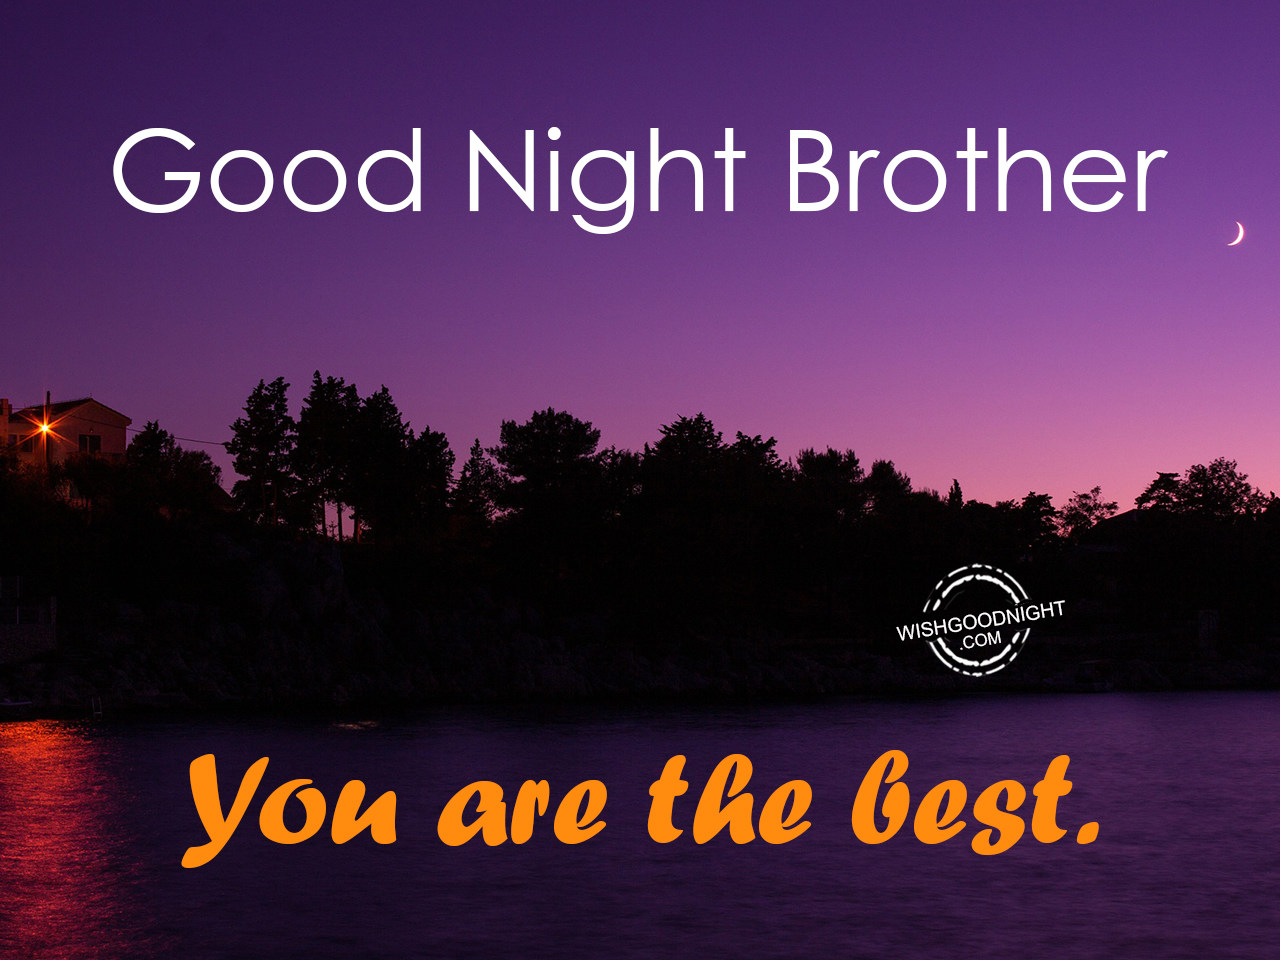 Good night big brother